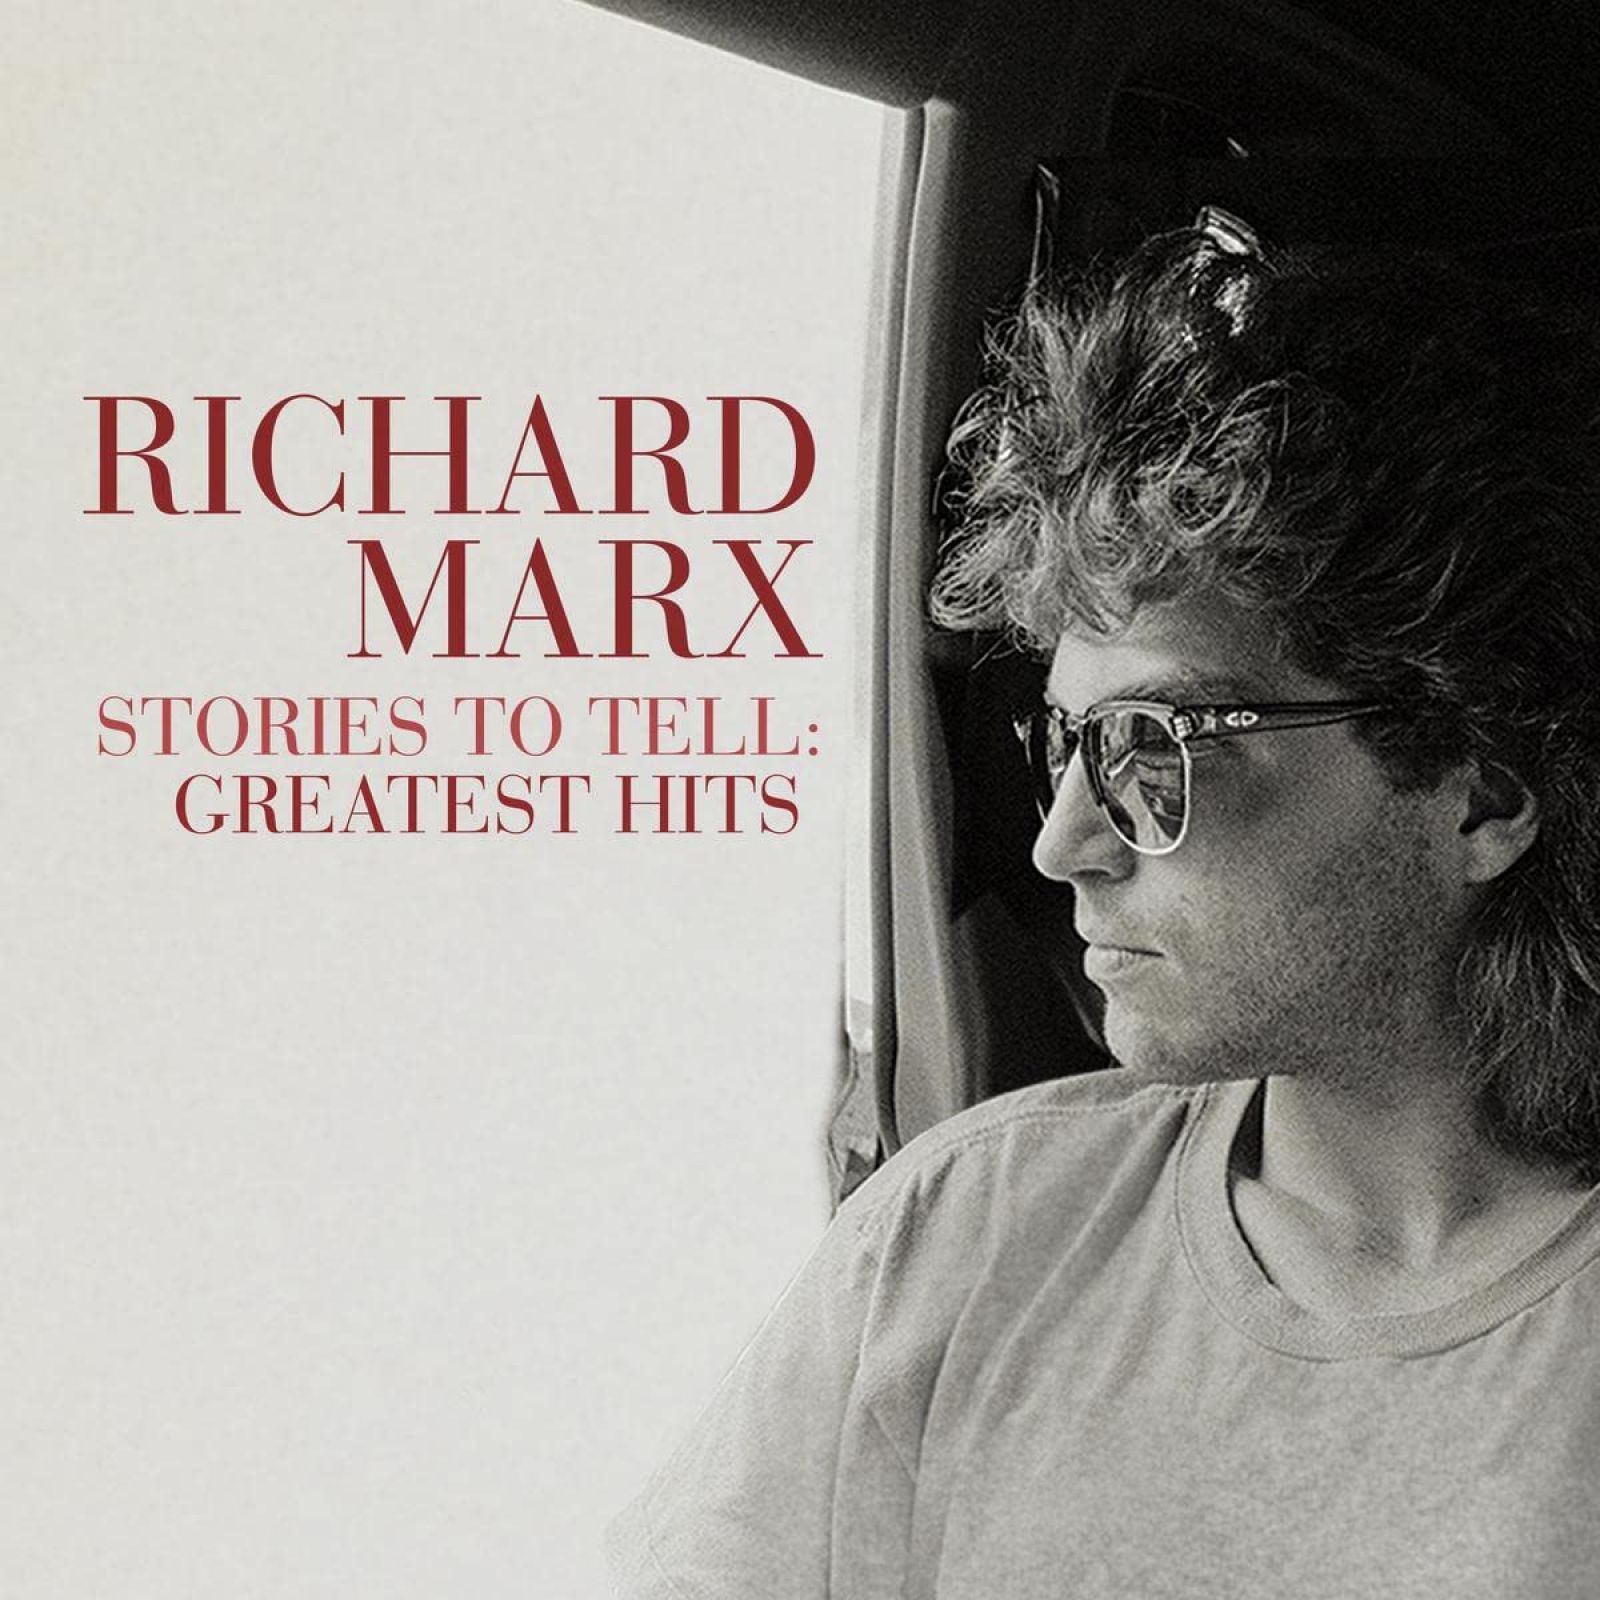 marx richard виниловая пластинка marx richard christmas spirit Виниловая пластинка Marx, Richard, Stories To Tell: Greatest Hits (4050538715392)